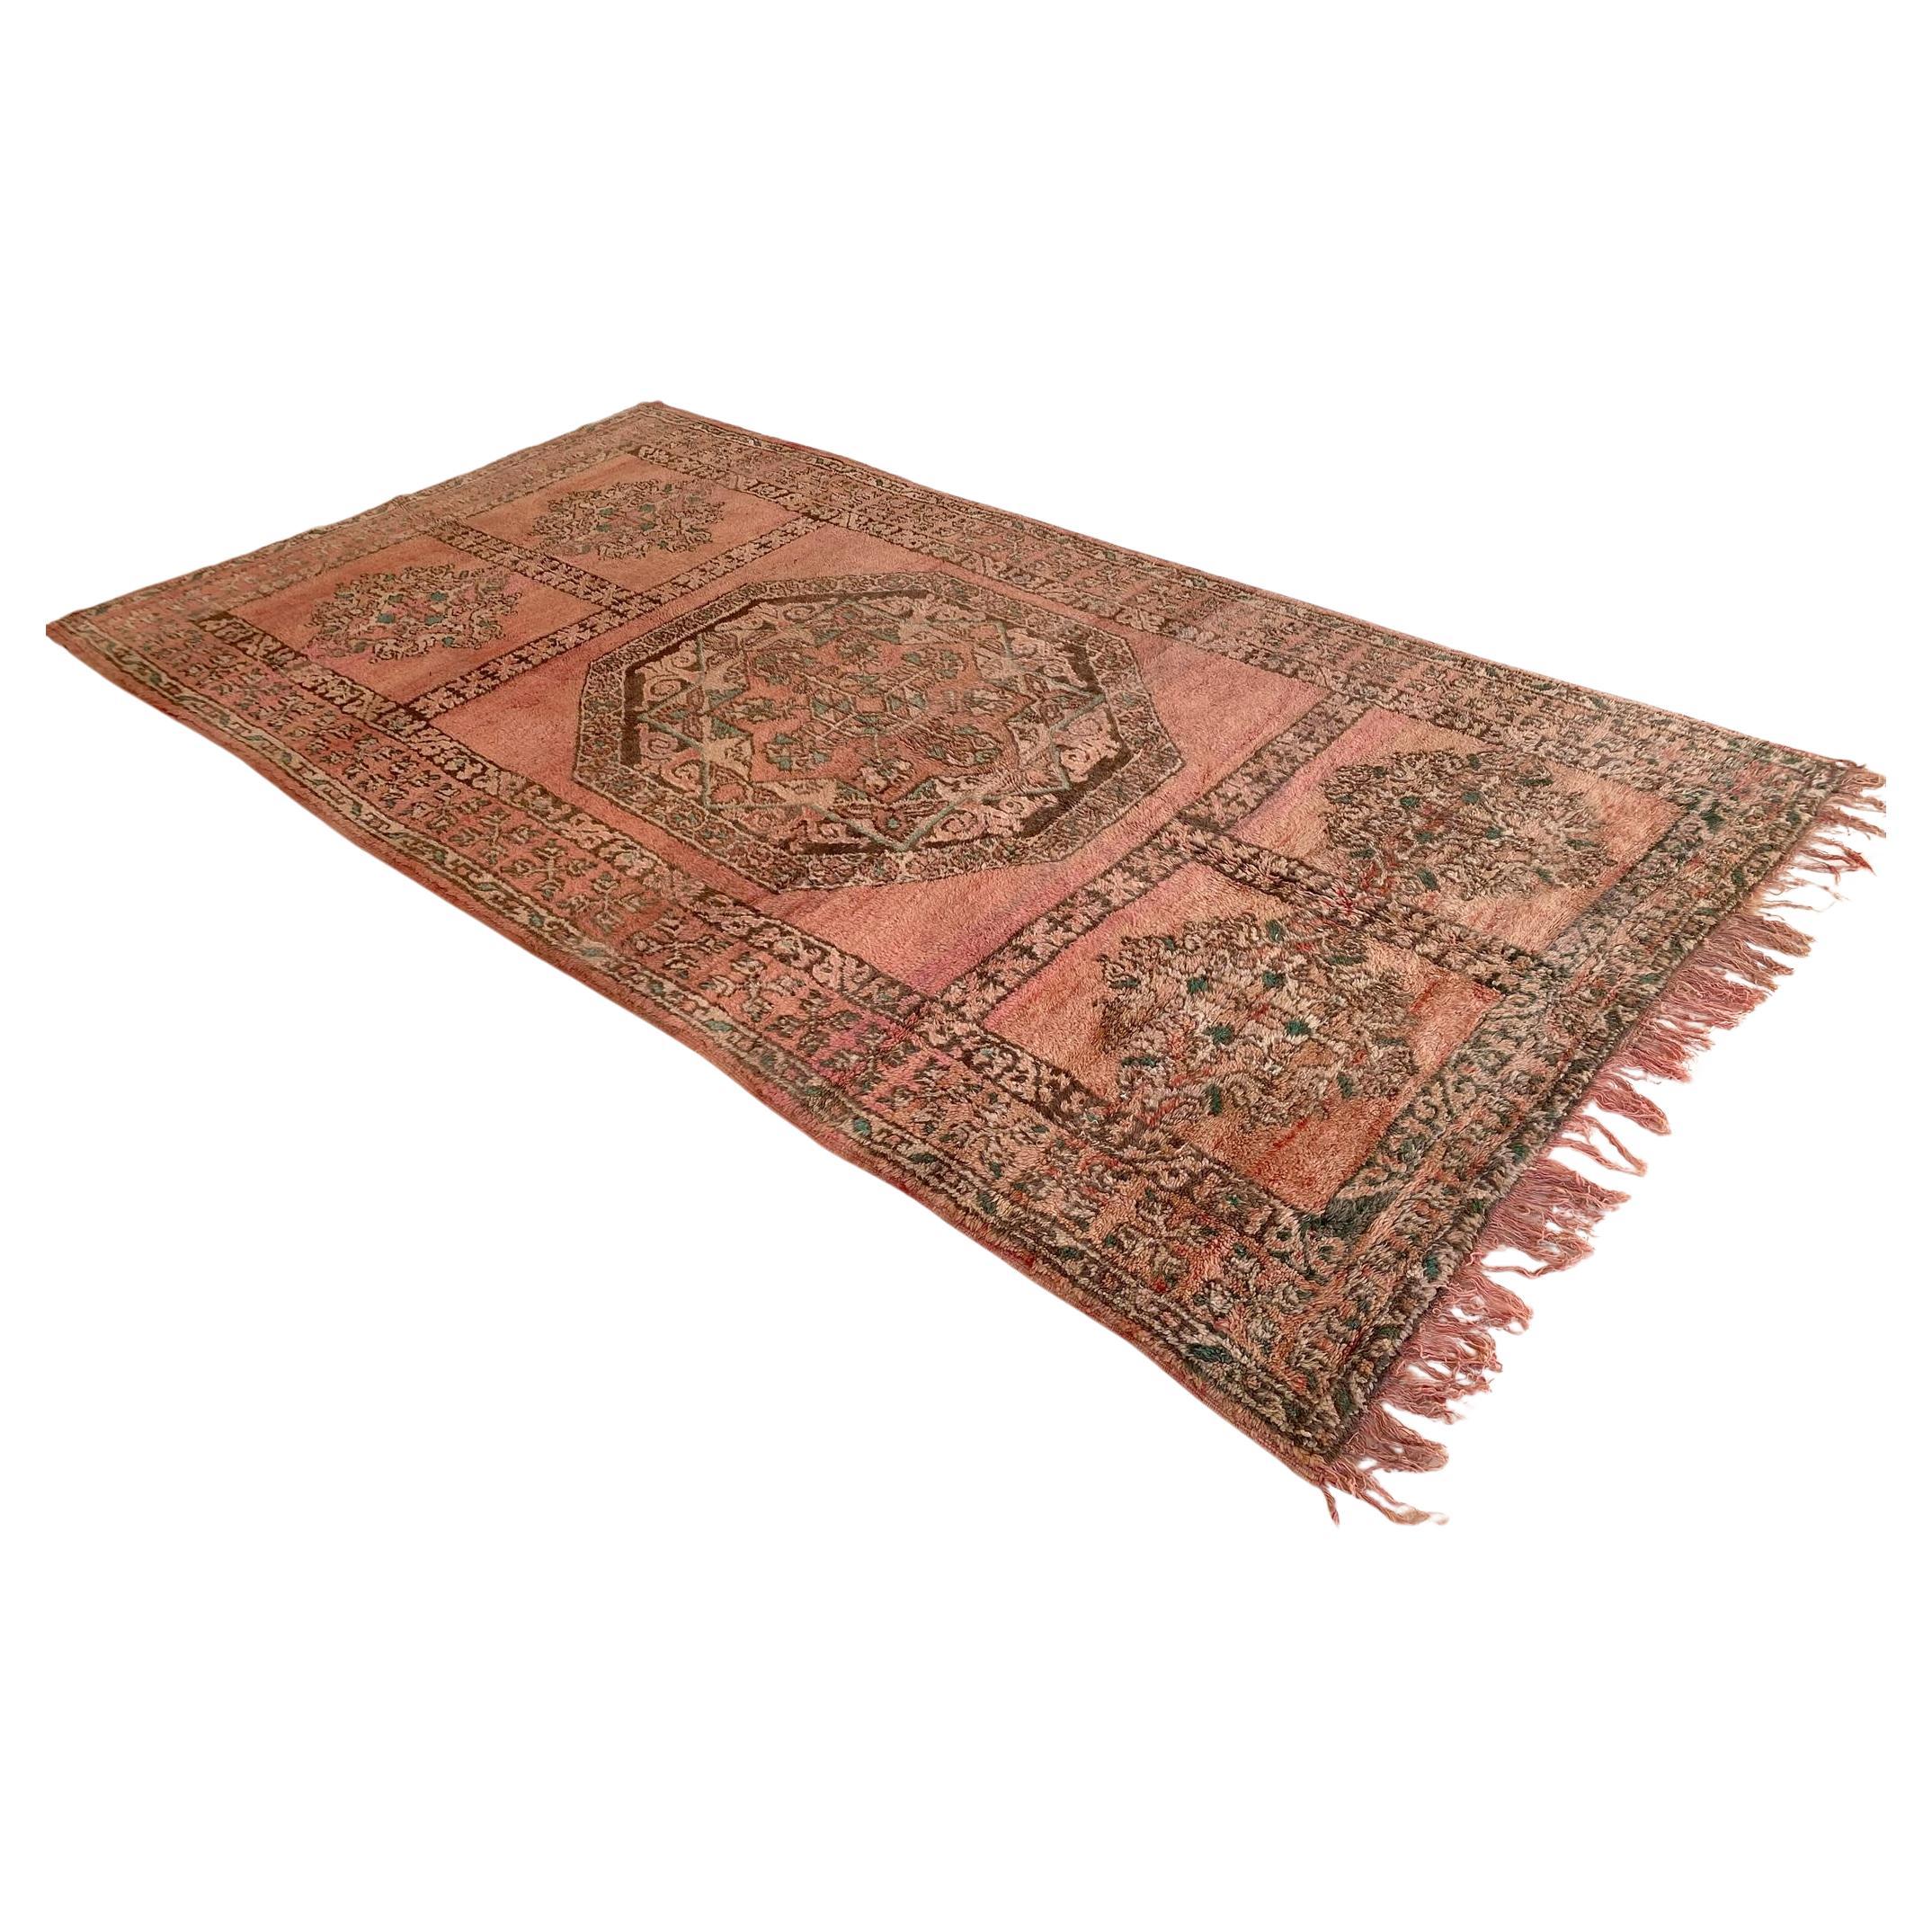 Vintage Moroccan Ait Yacoub rug - Peach fuzz - 7.1x13.3feet / 217x407cm